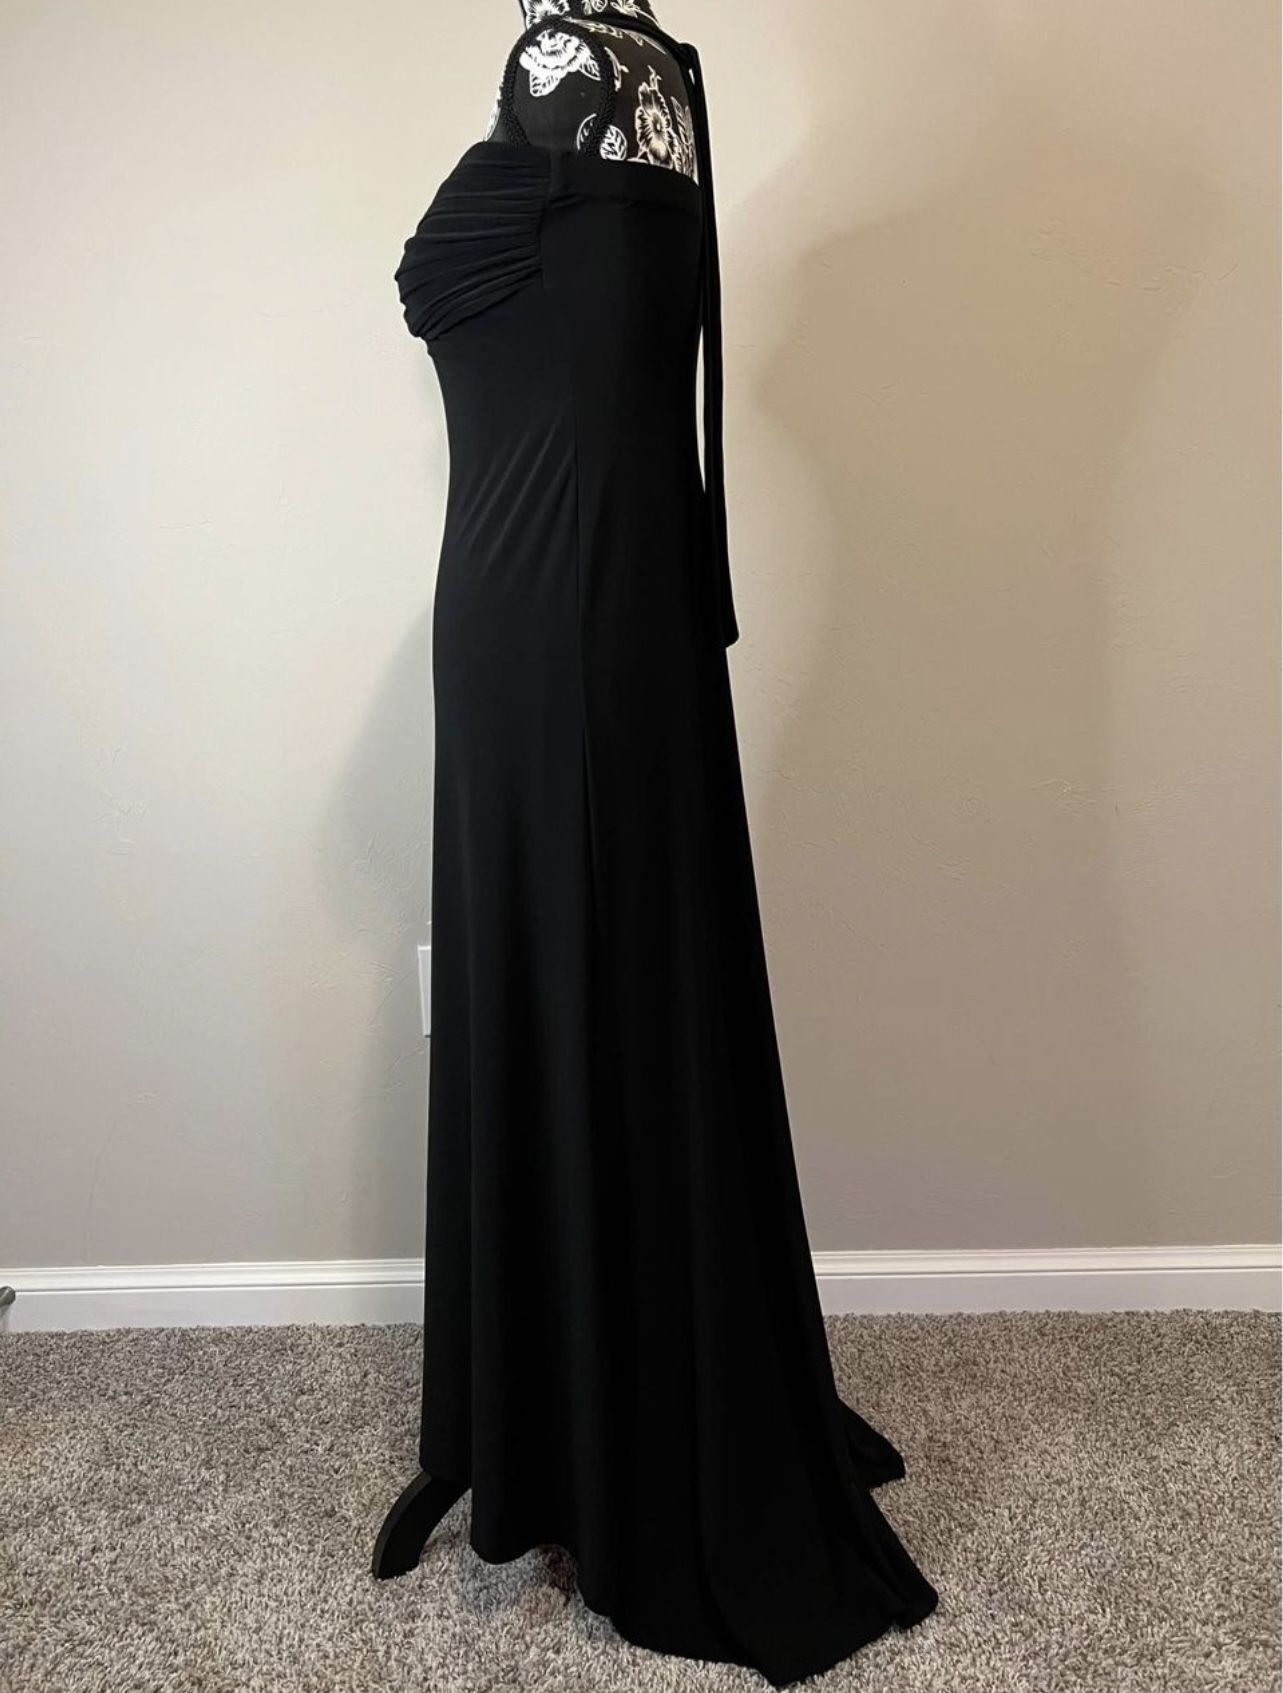 Women B. Smart Elegant Long Black Dress Gown Size 5 / 6